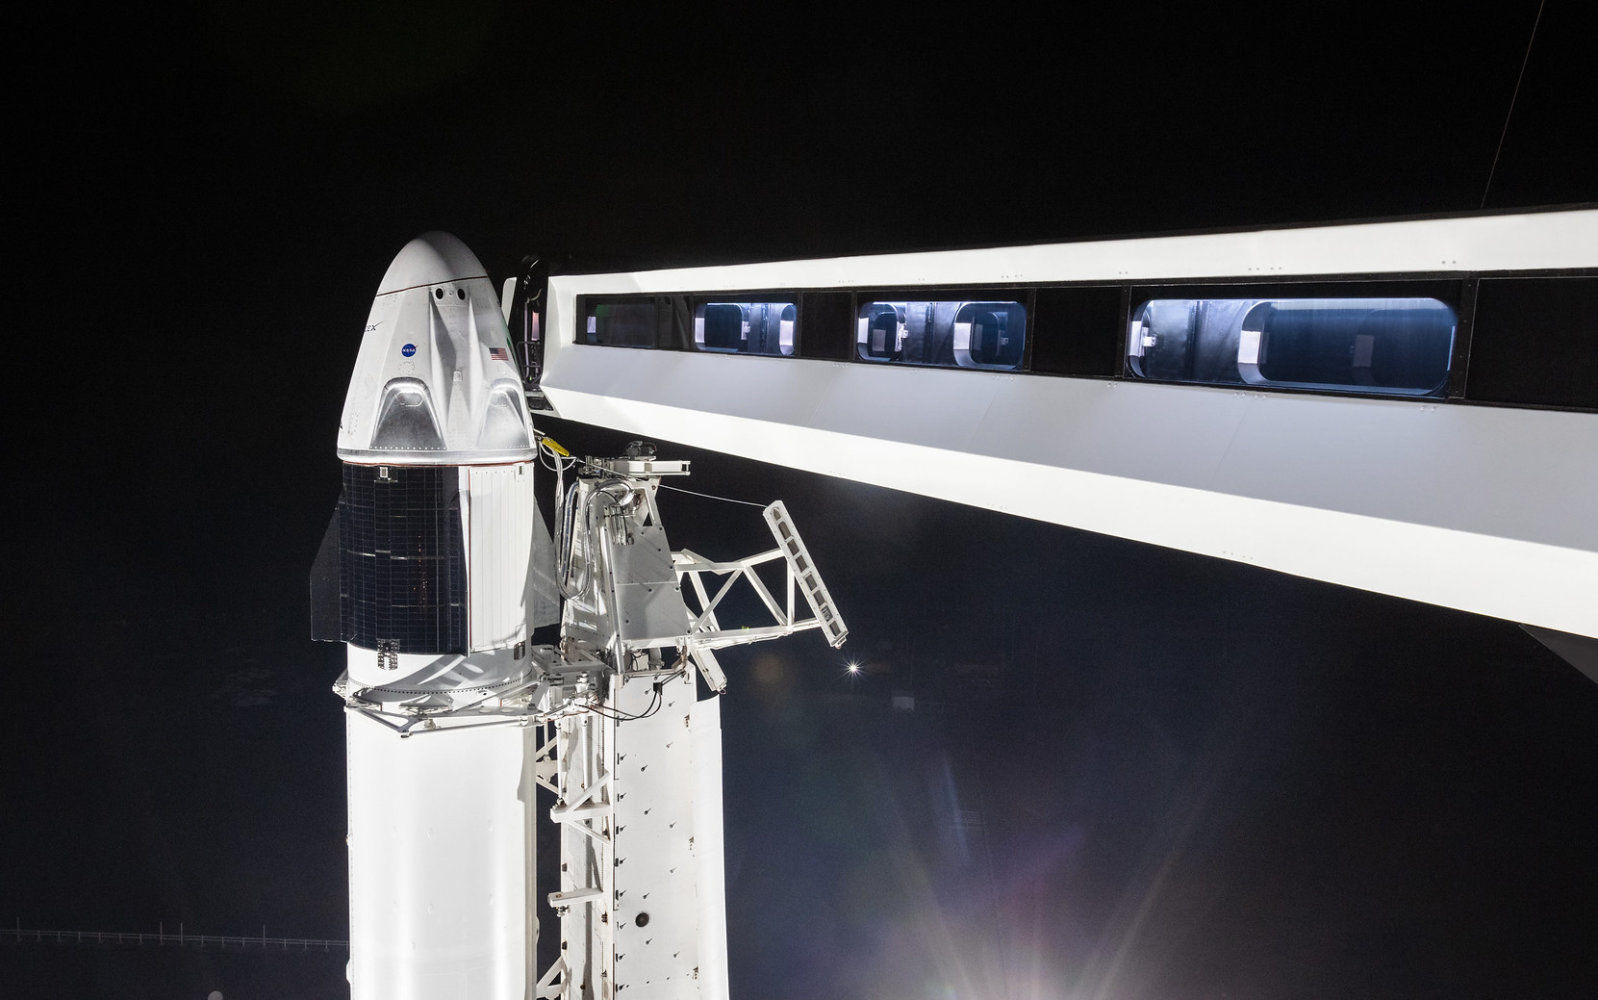 SpaceXが宇宙旅行代理店と契約。2021年にも軌道への旅行が実現？